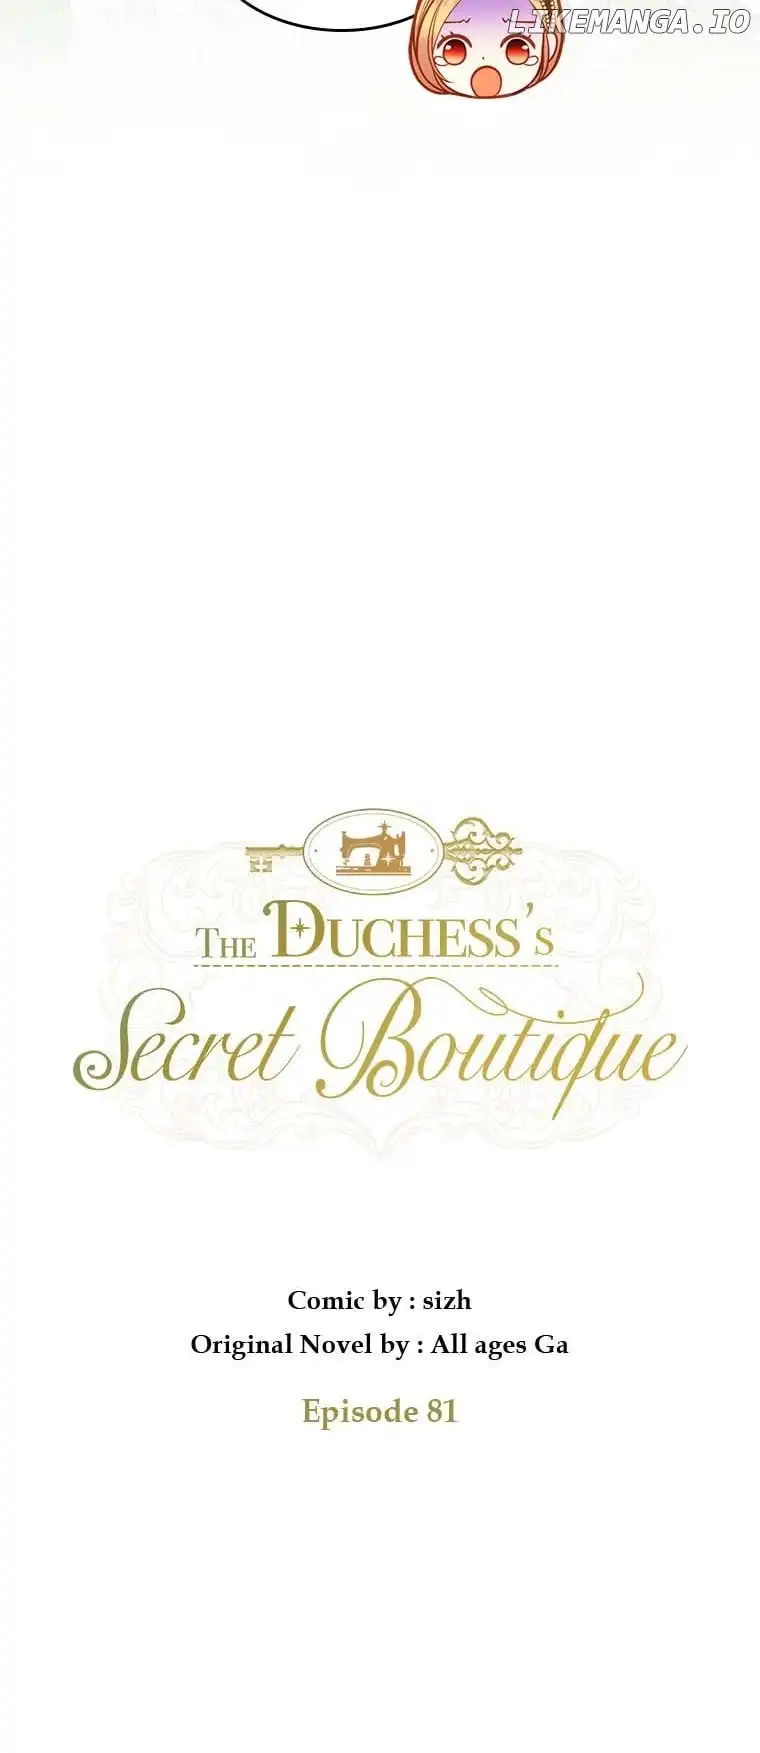 The Duchess’S Secret Dressing Room - 81 page 10-04a93e12